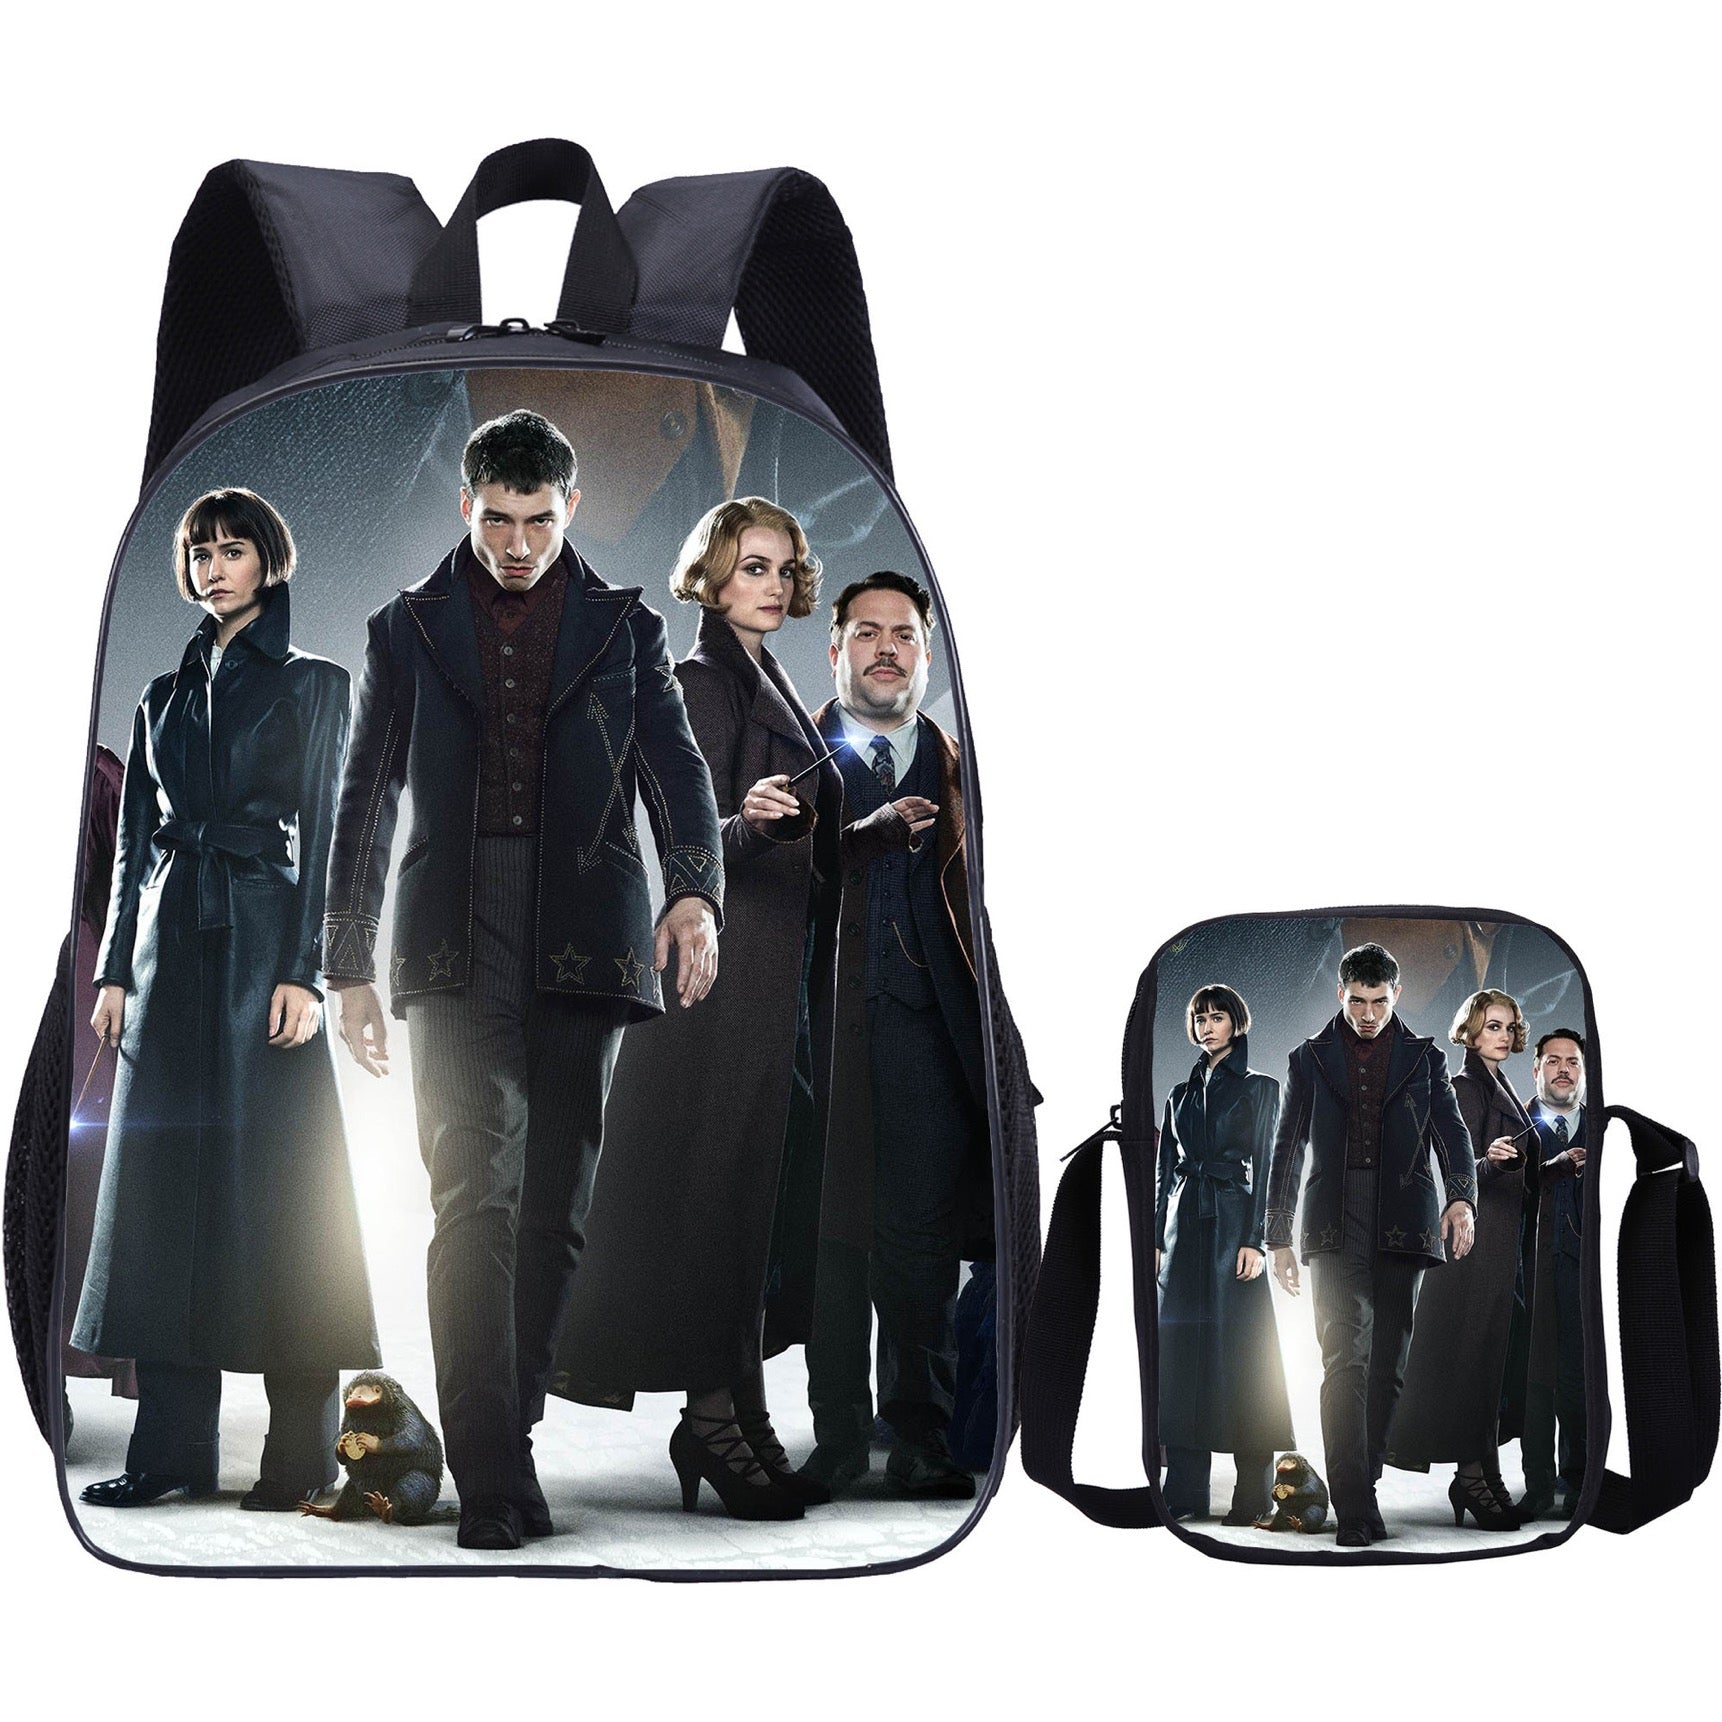 Fantastic Beasts The Secrets of Dumbledore Schoolbag Backpack Lunch Bag  for Kids Students